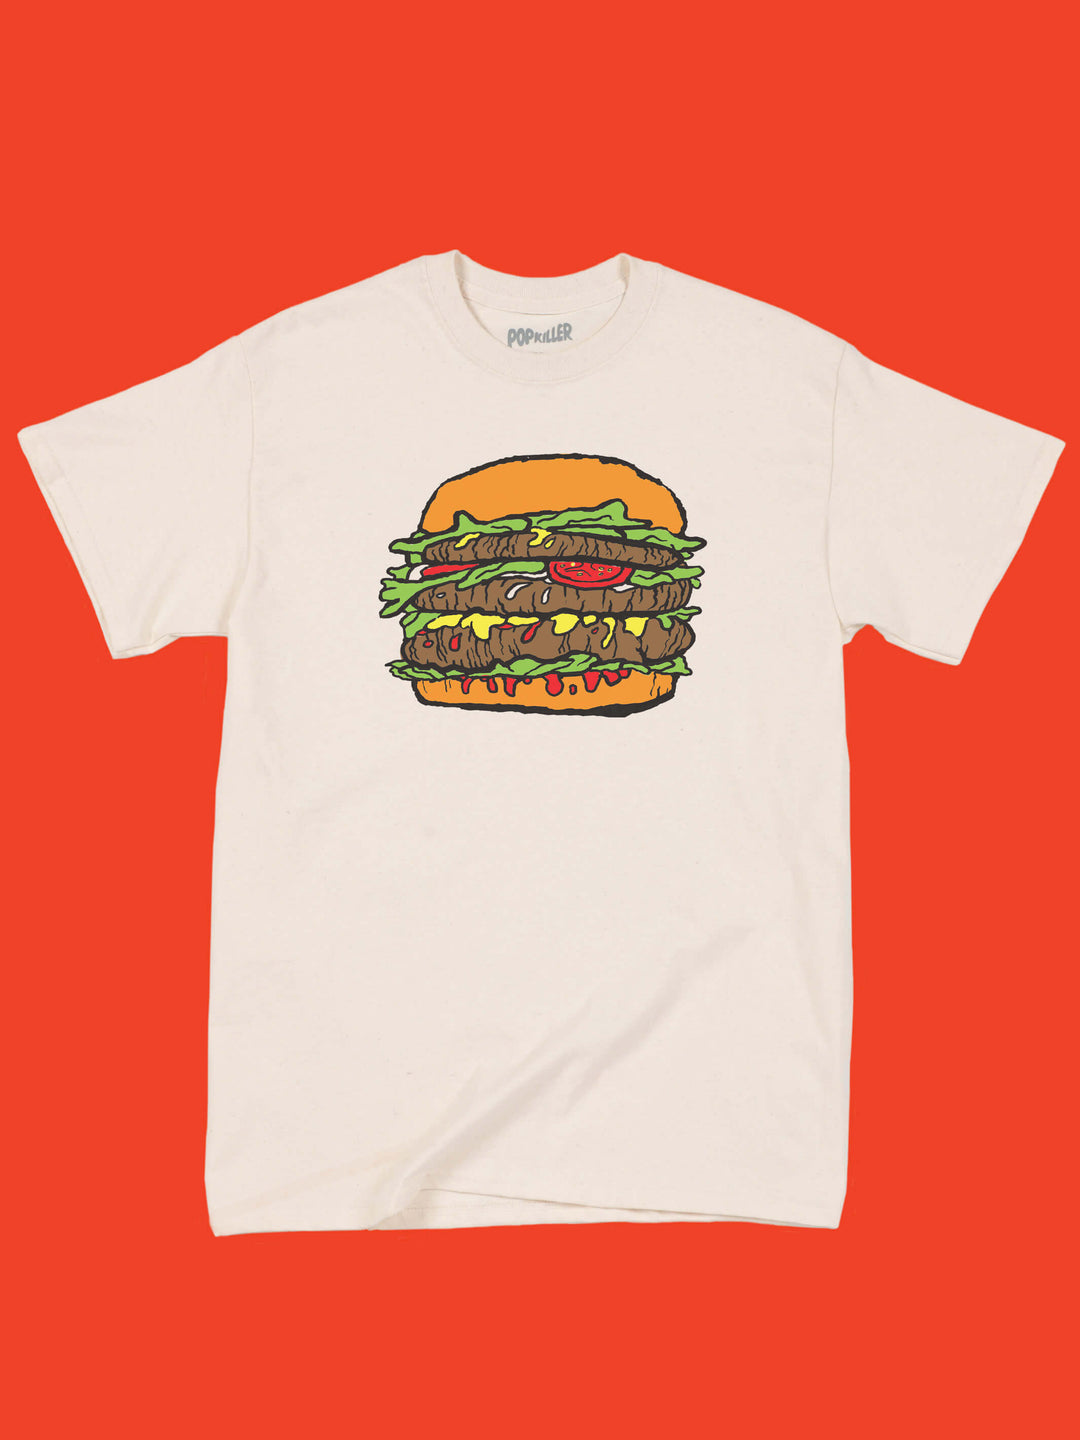 Cartoon hamburger pop art graphic t-shirt.